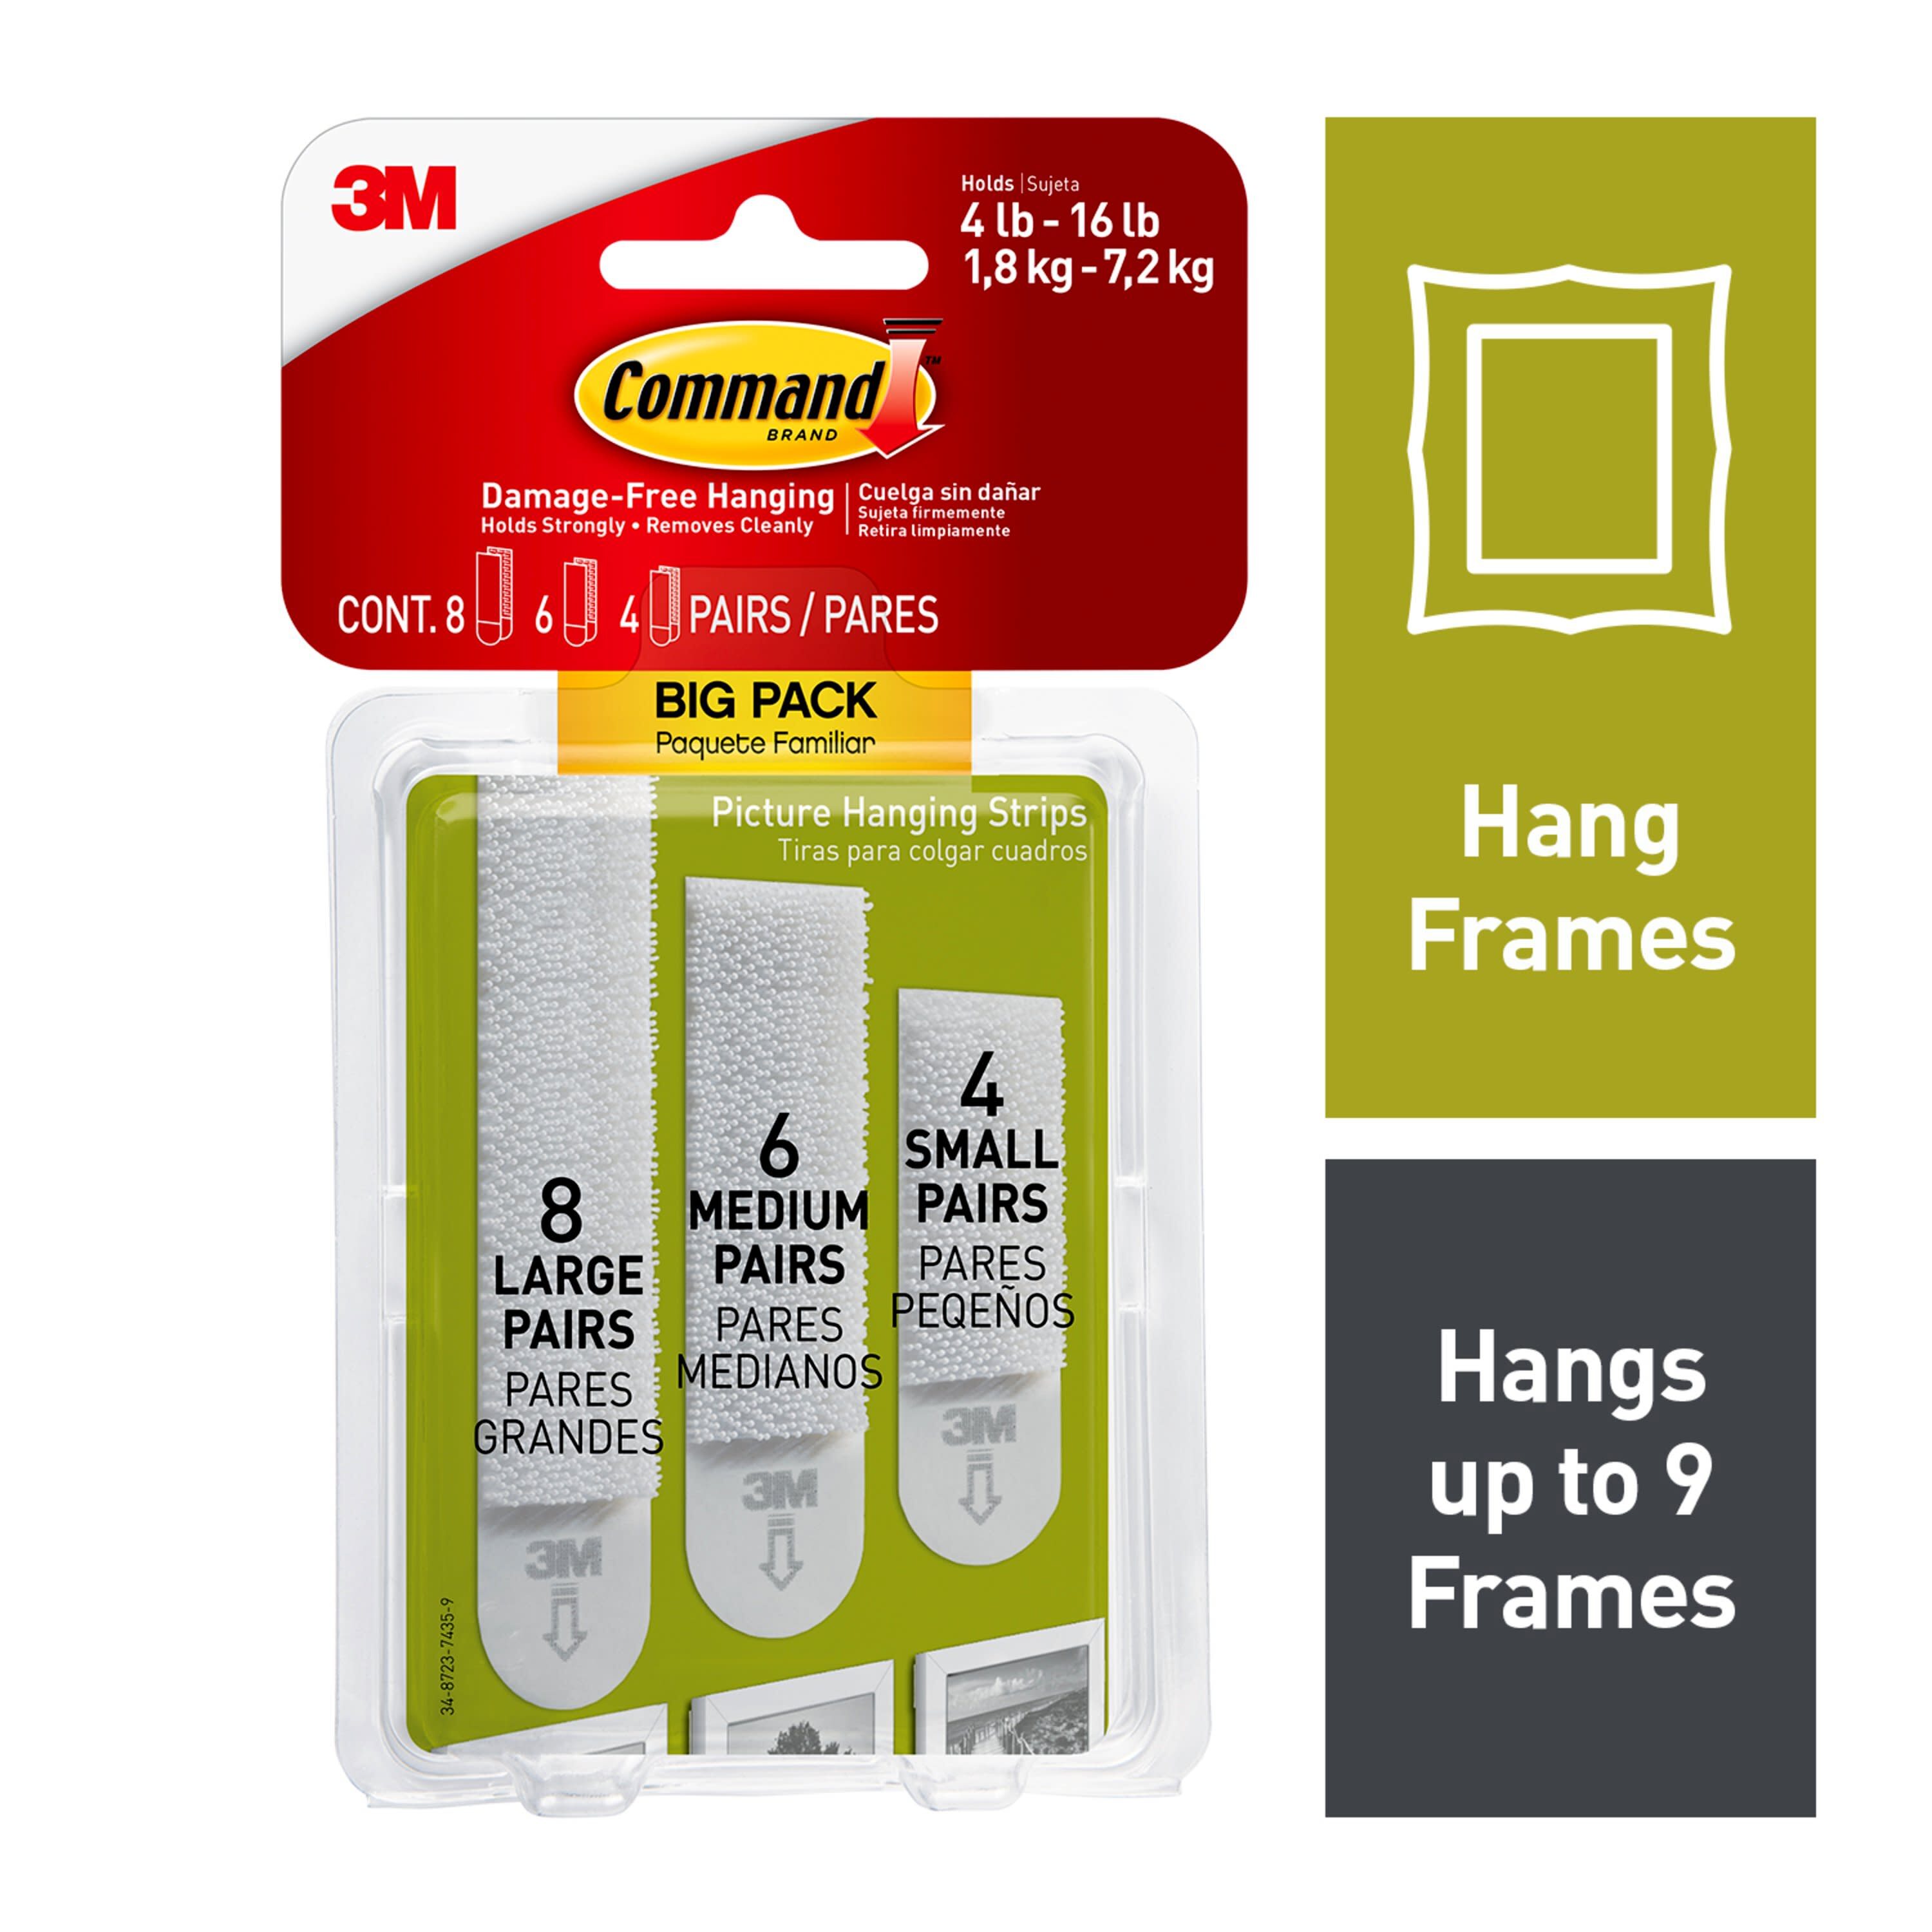 Command Large and Medium Picture Hanging Strips Mega-Pack, 28-Pairs: 12-Medium, 16-Large, Decorate Damage-Free